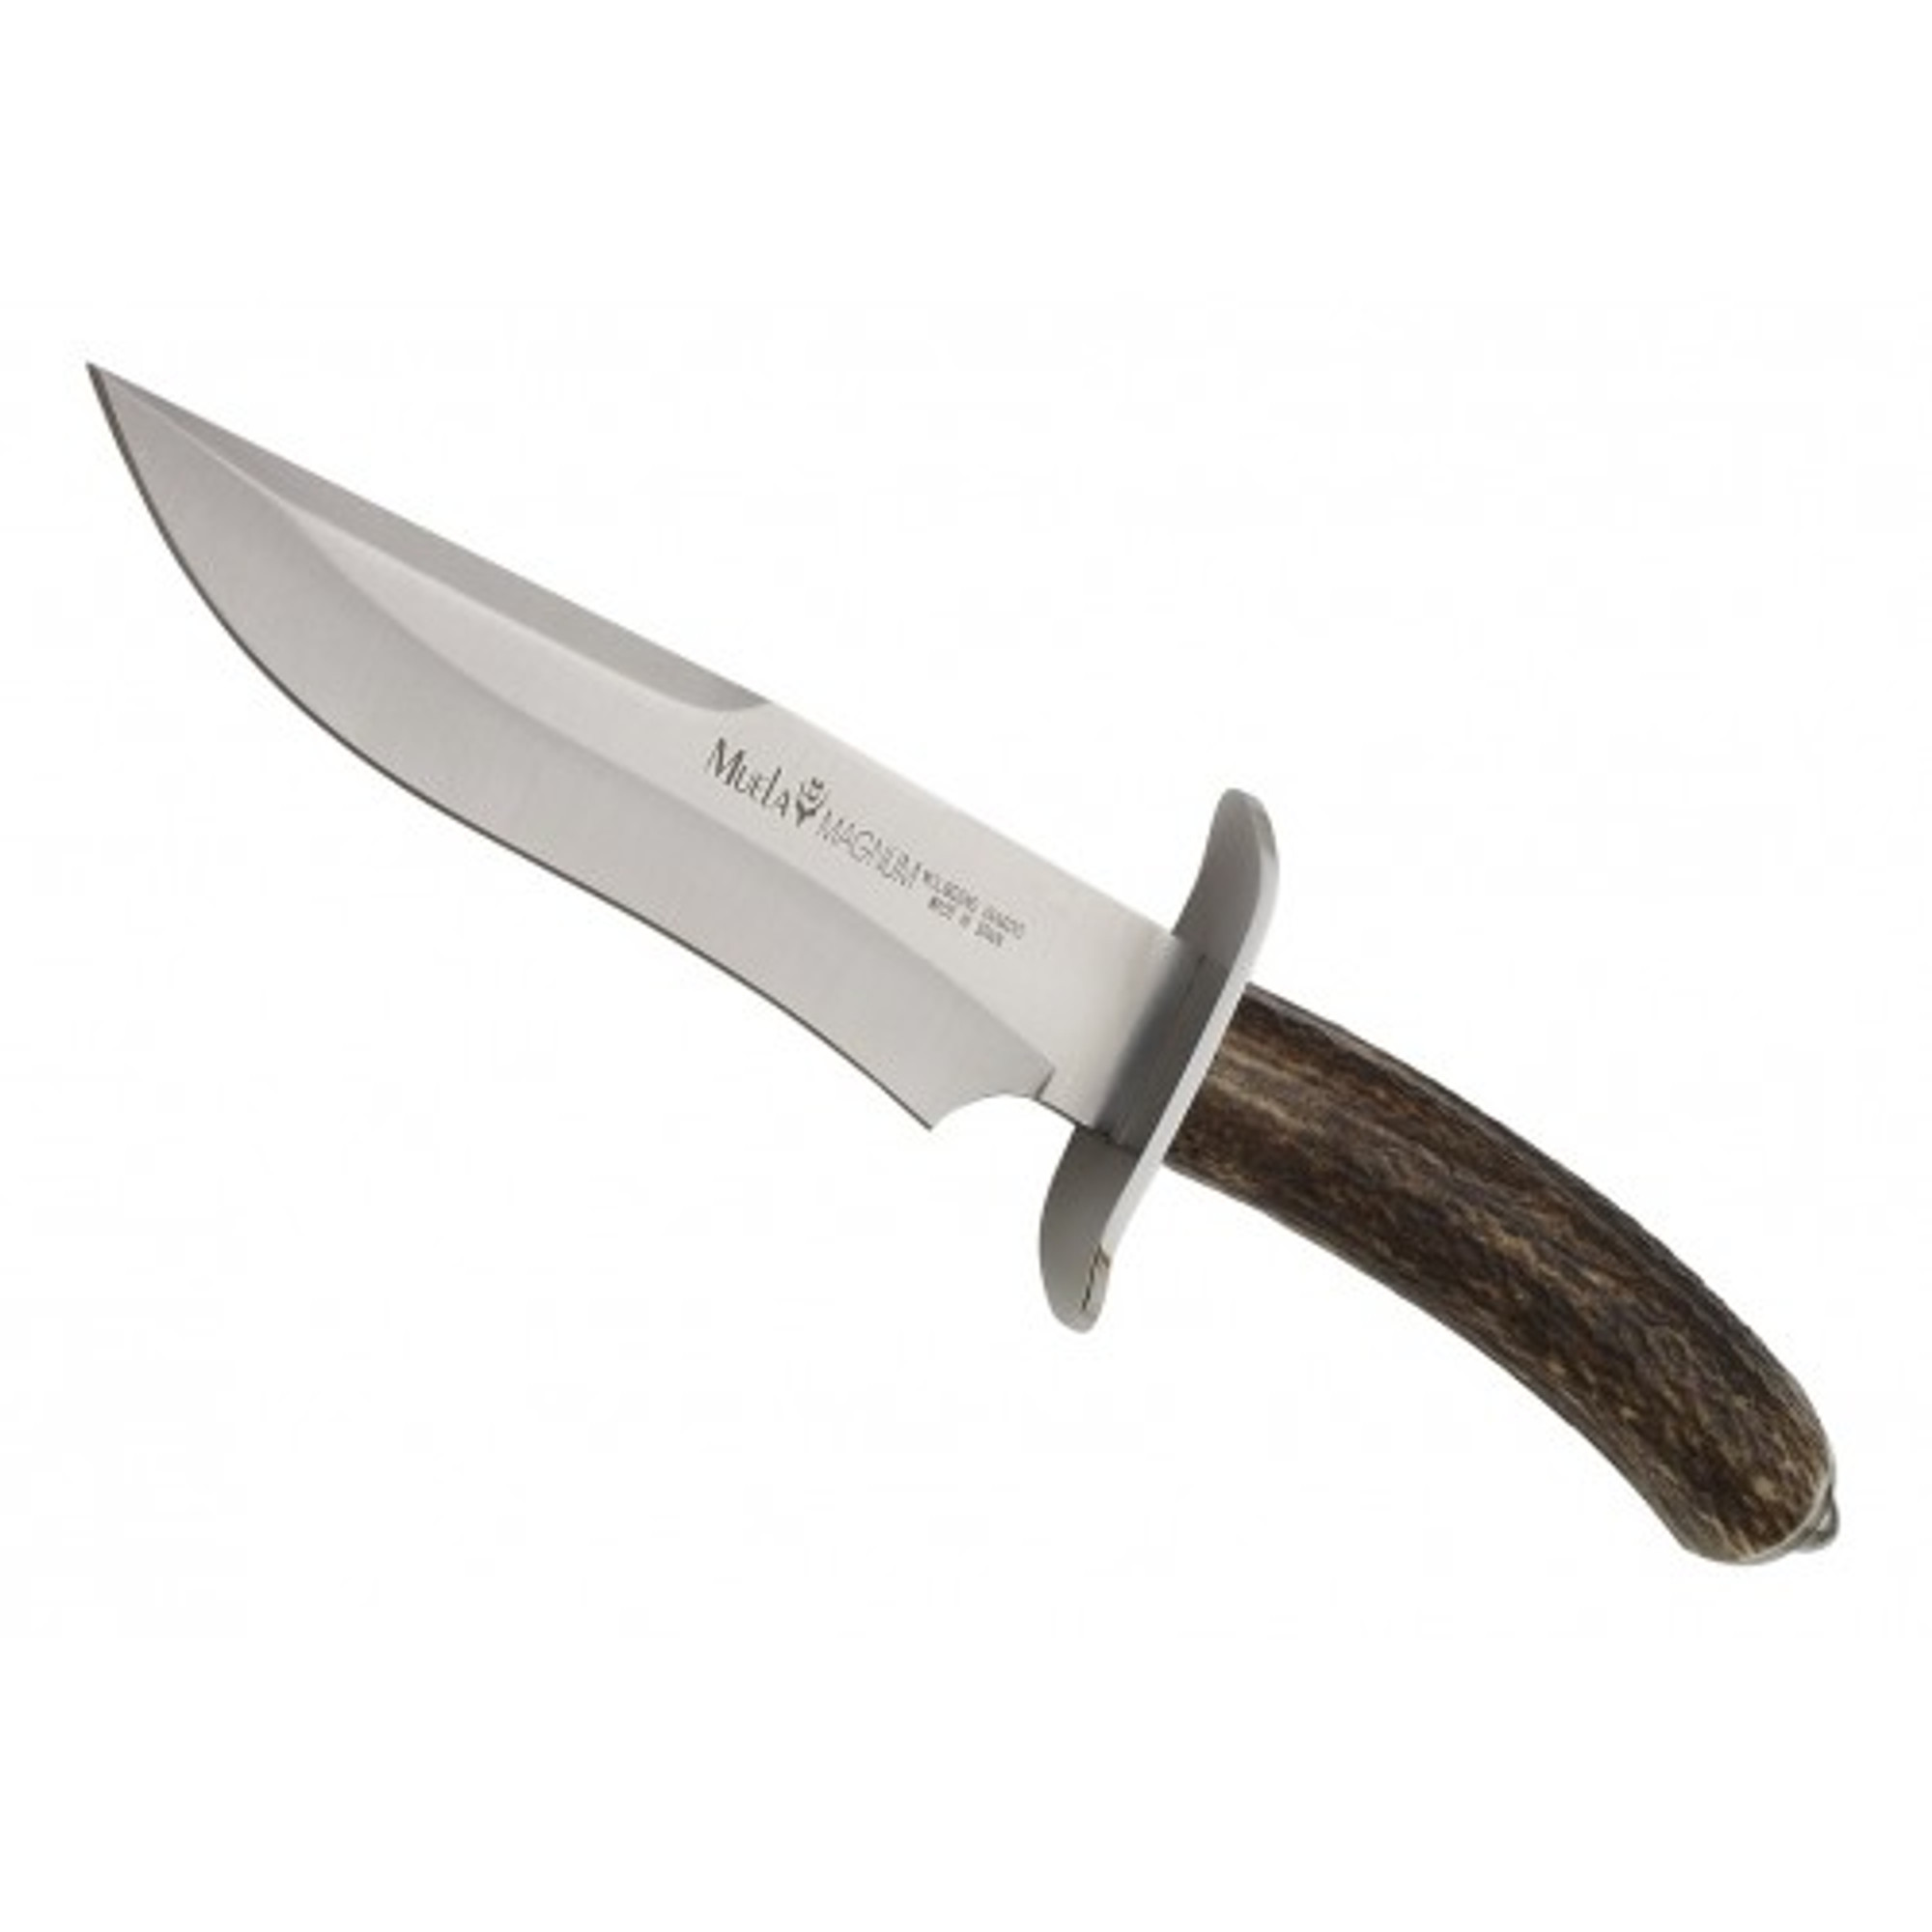 MUELA MAGNUM-19A, X50CrMoV15, 7-5/8" Fixed Blade Hunting Knife, Deer Horn Handle